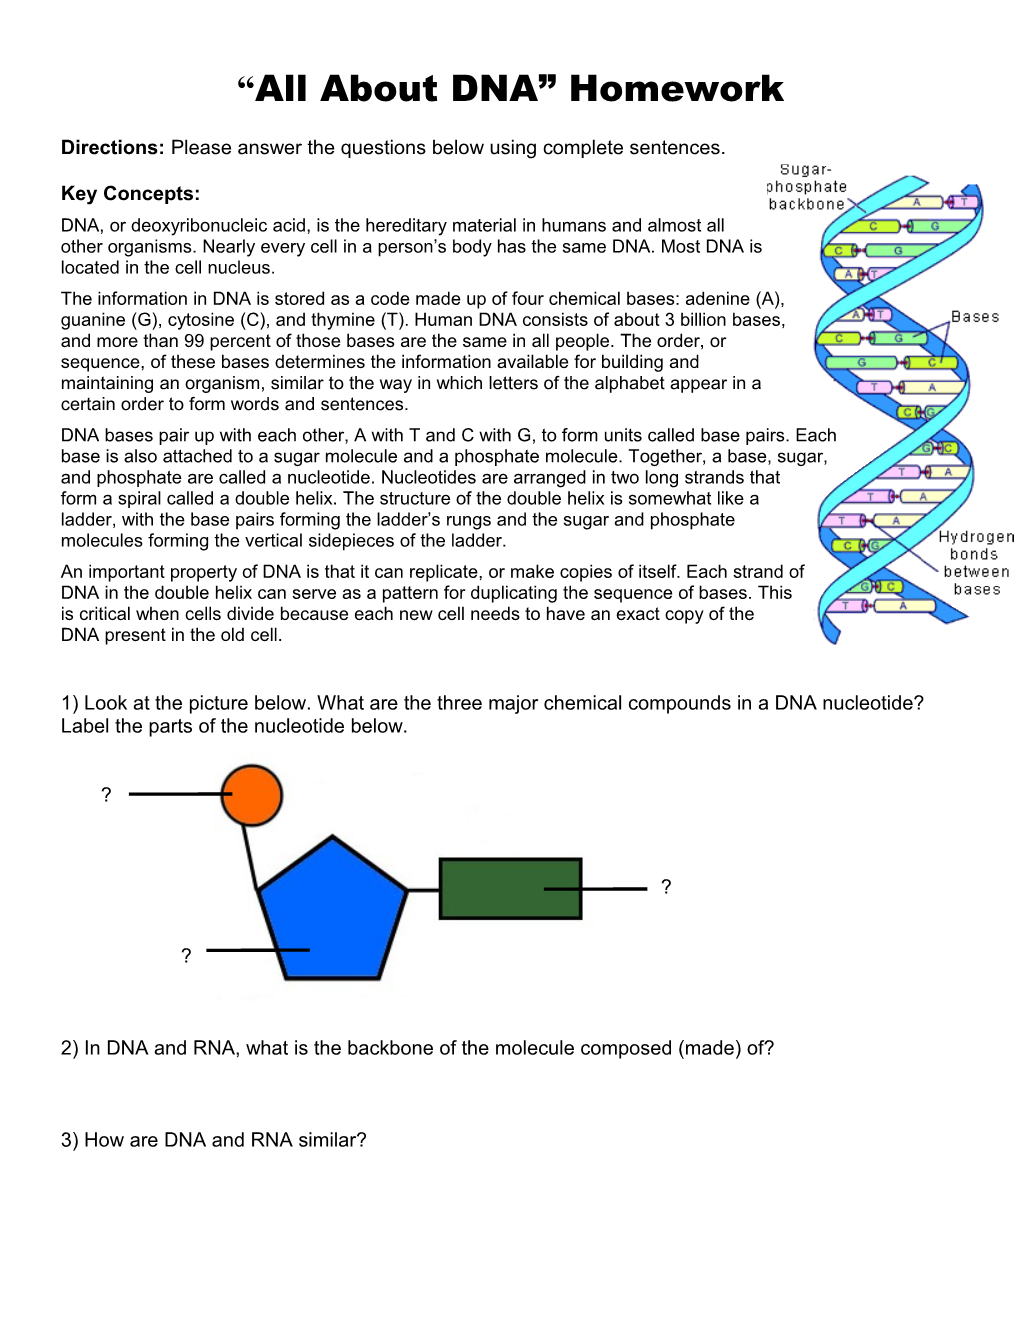 Homework # 11 - DNA-RNA PROBLEMS - Extra Credit 5 Points